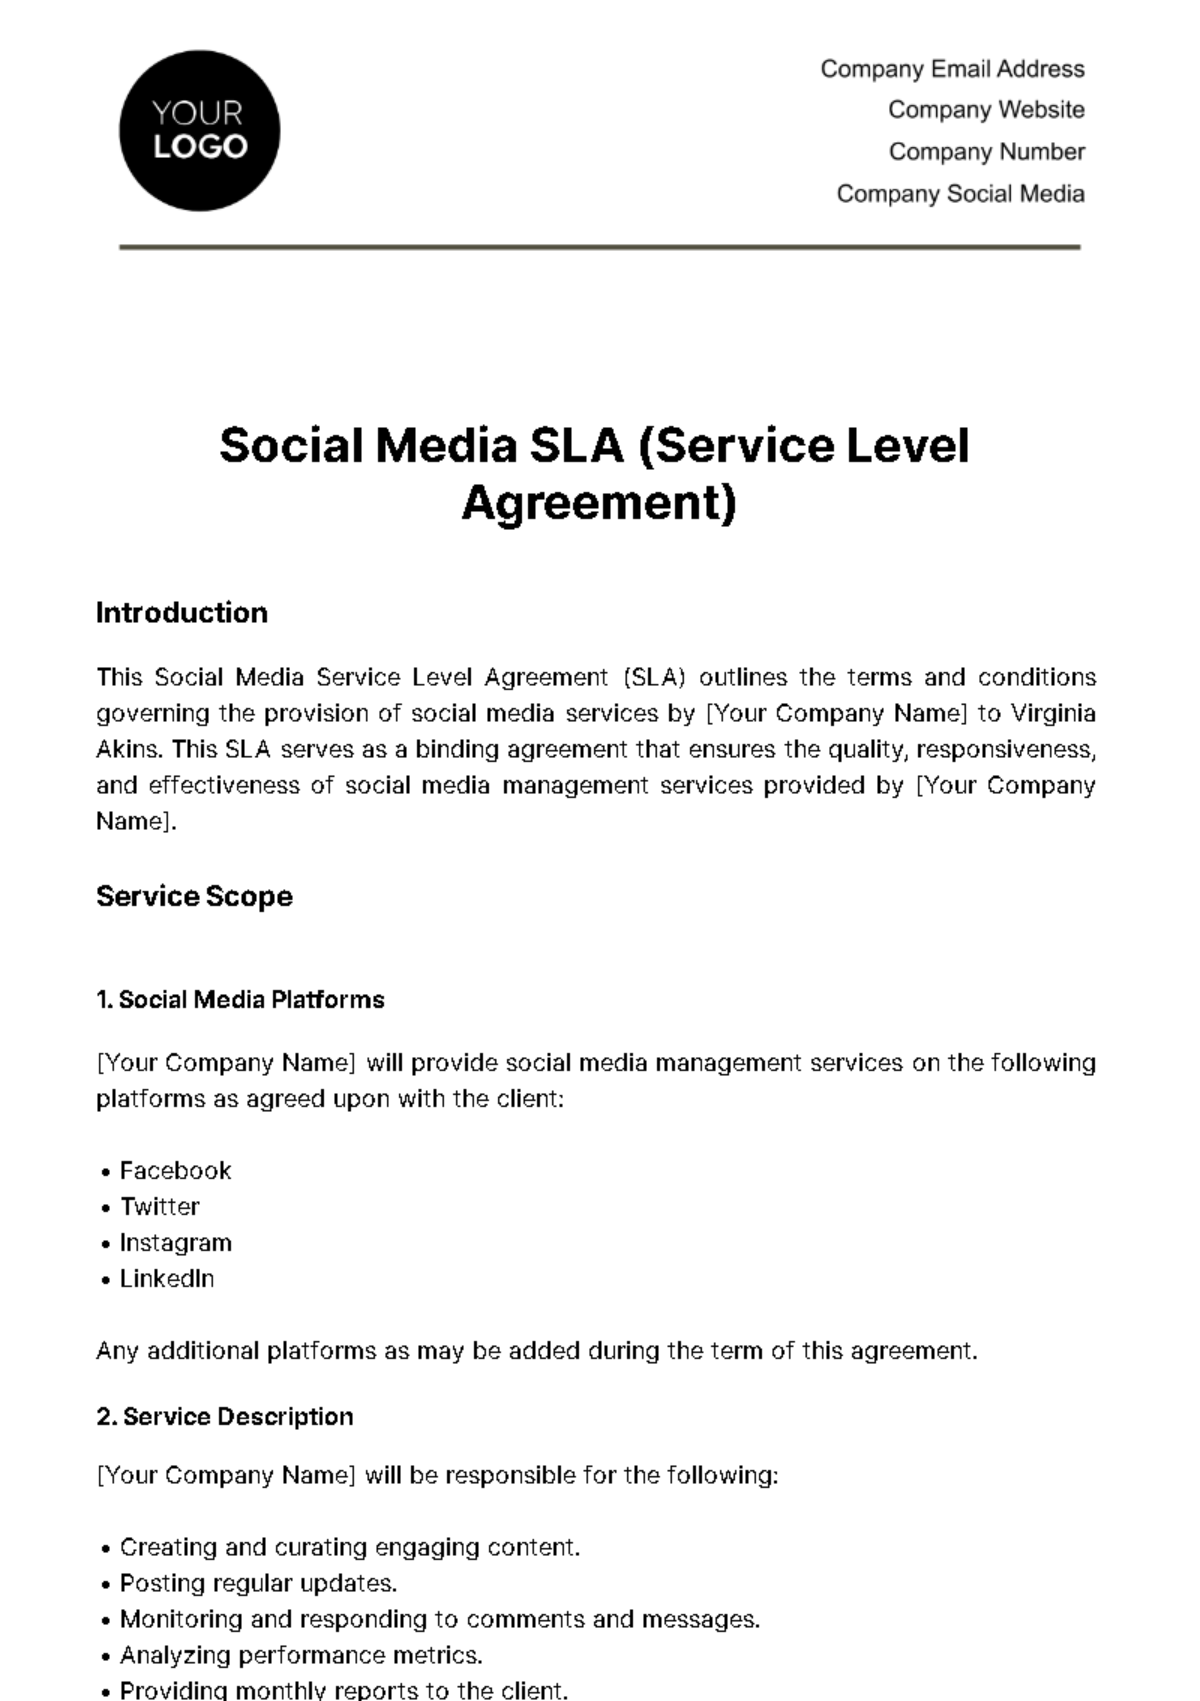 Social Media Marketing SLA Template